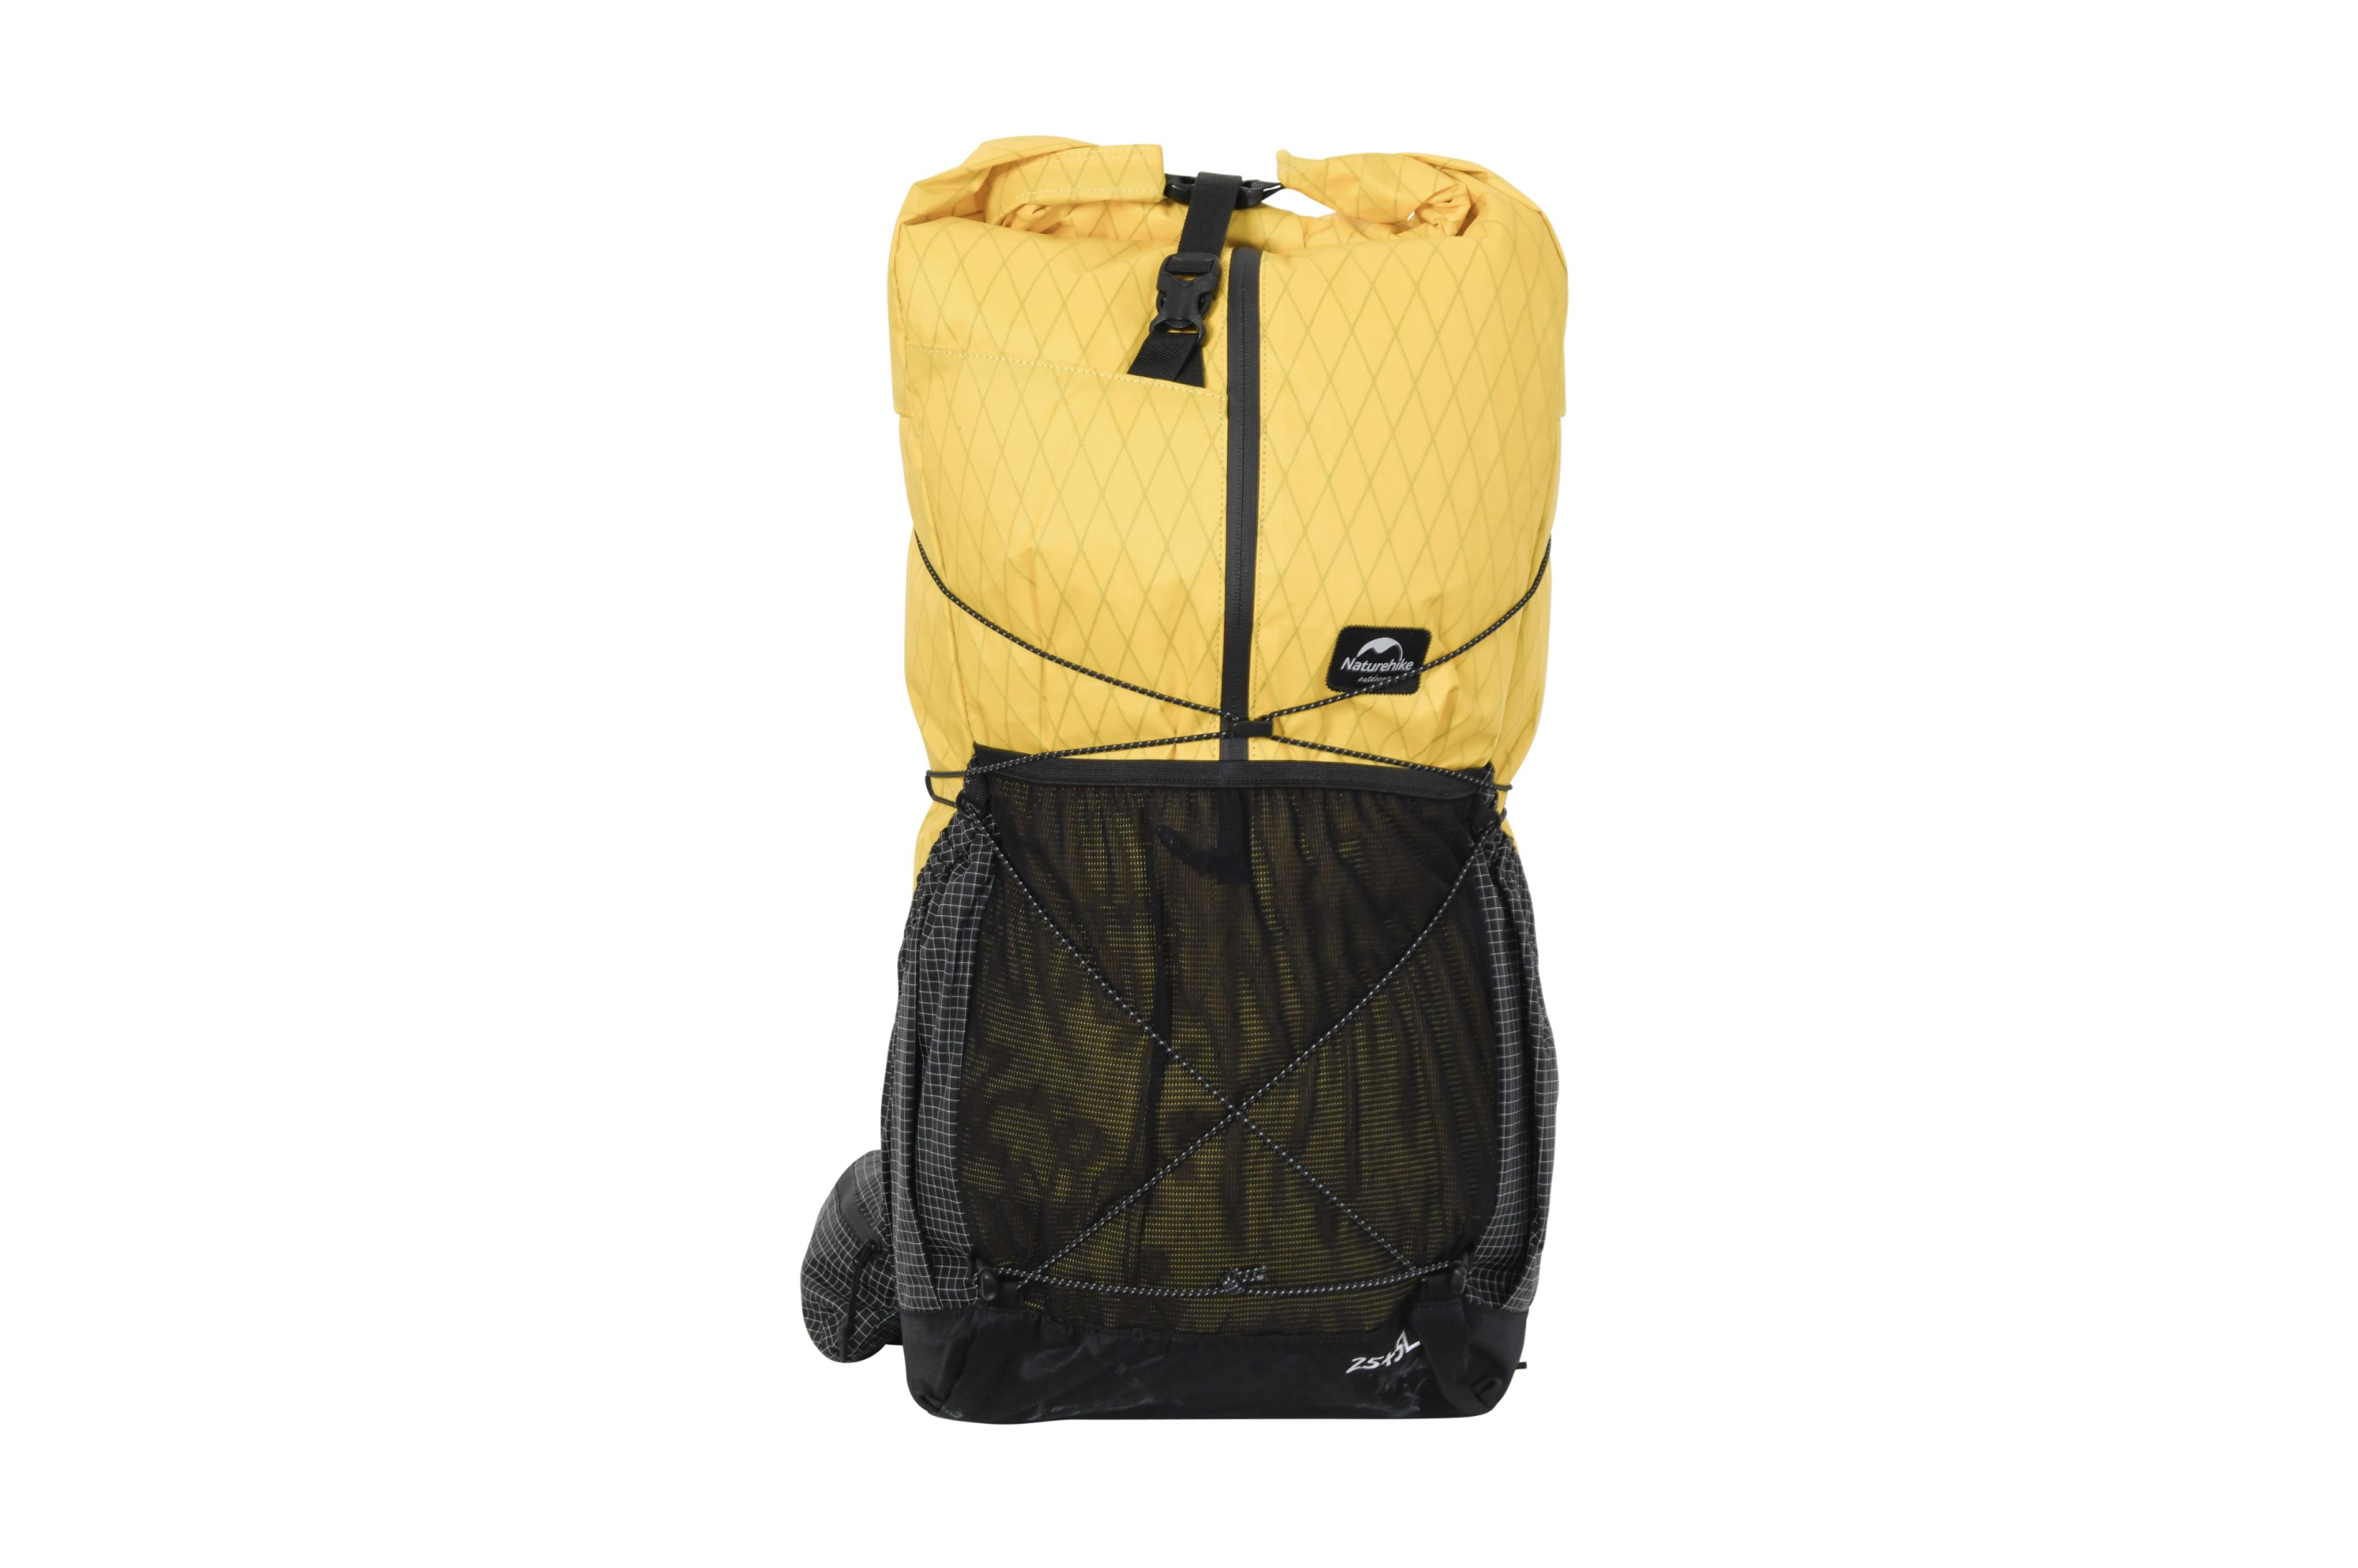 ZT06 XPAC backpack